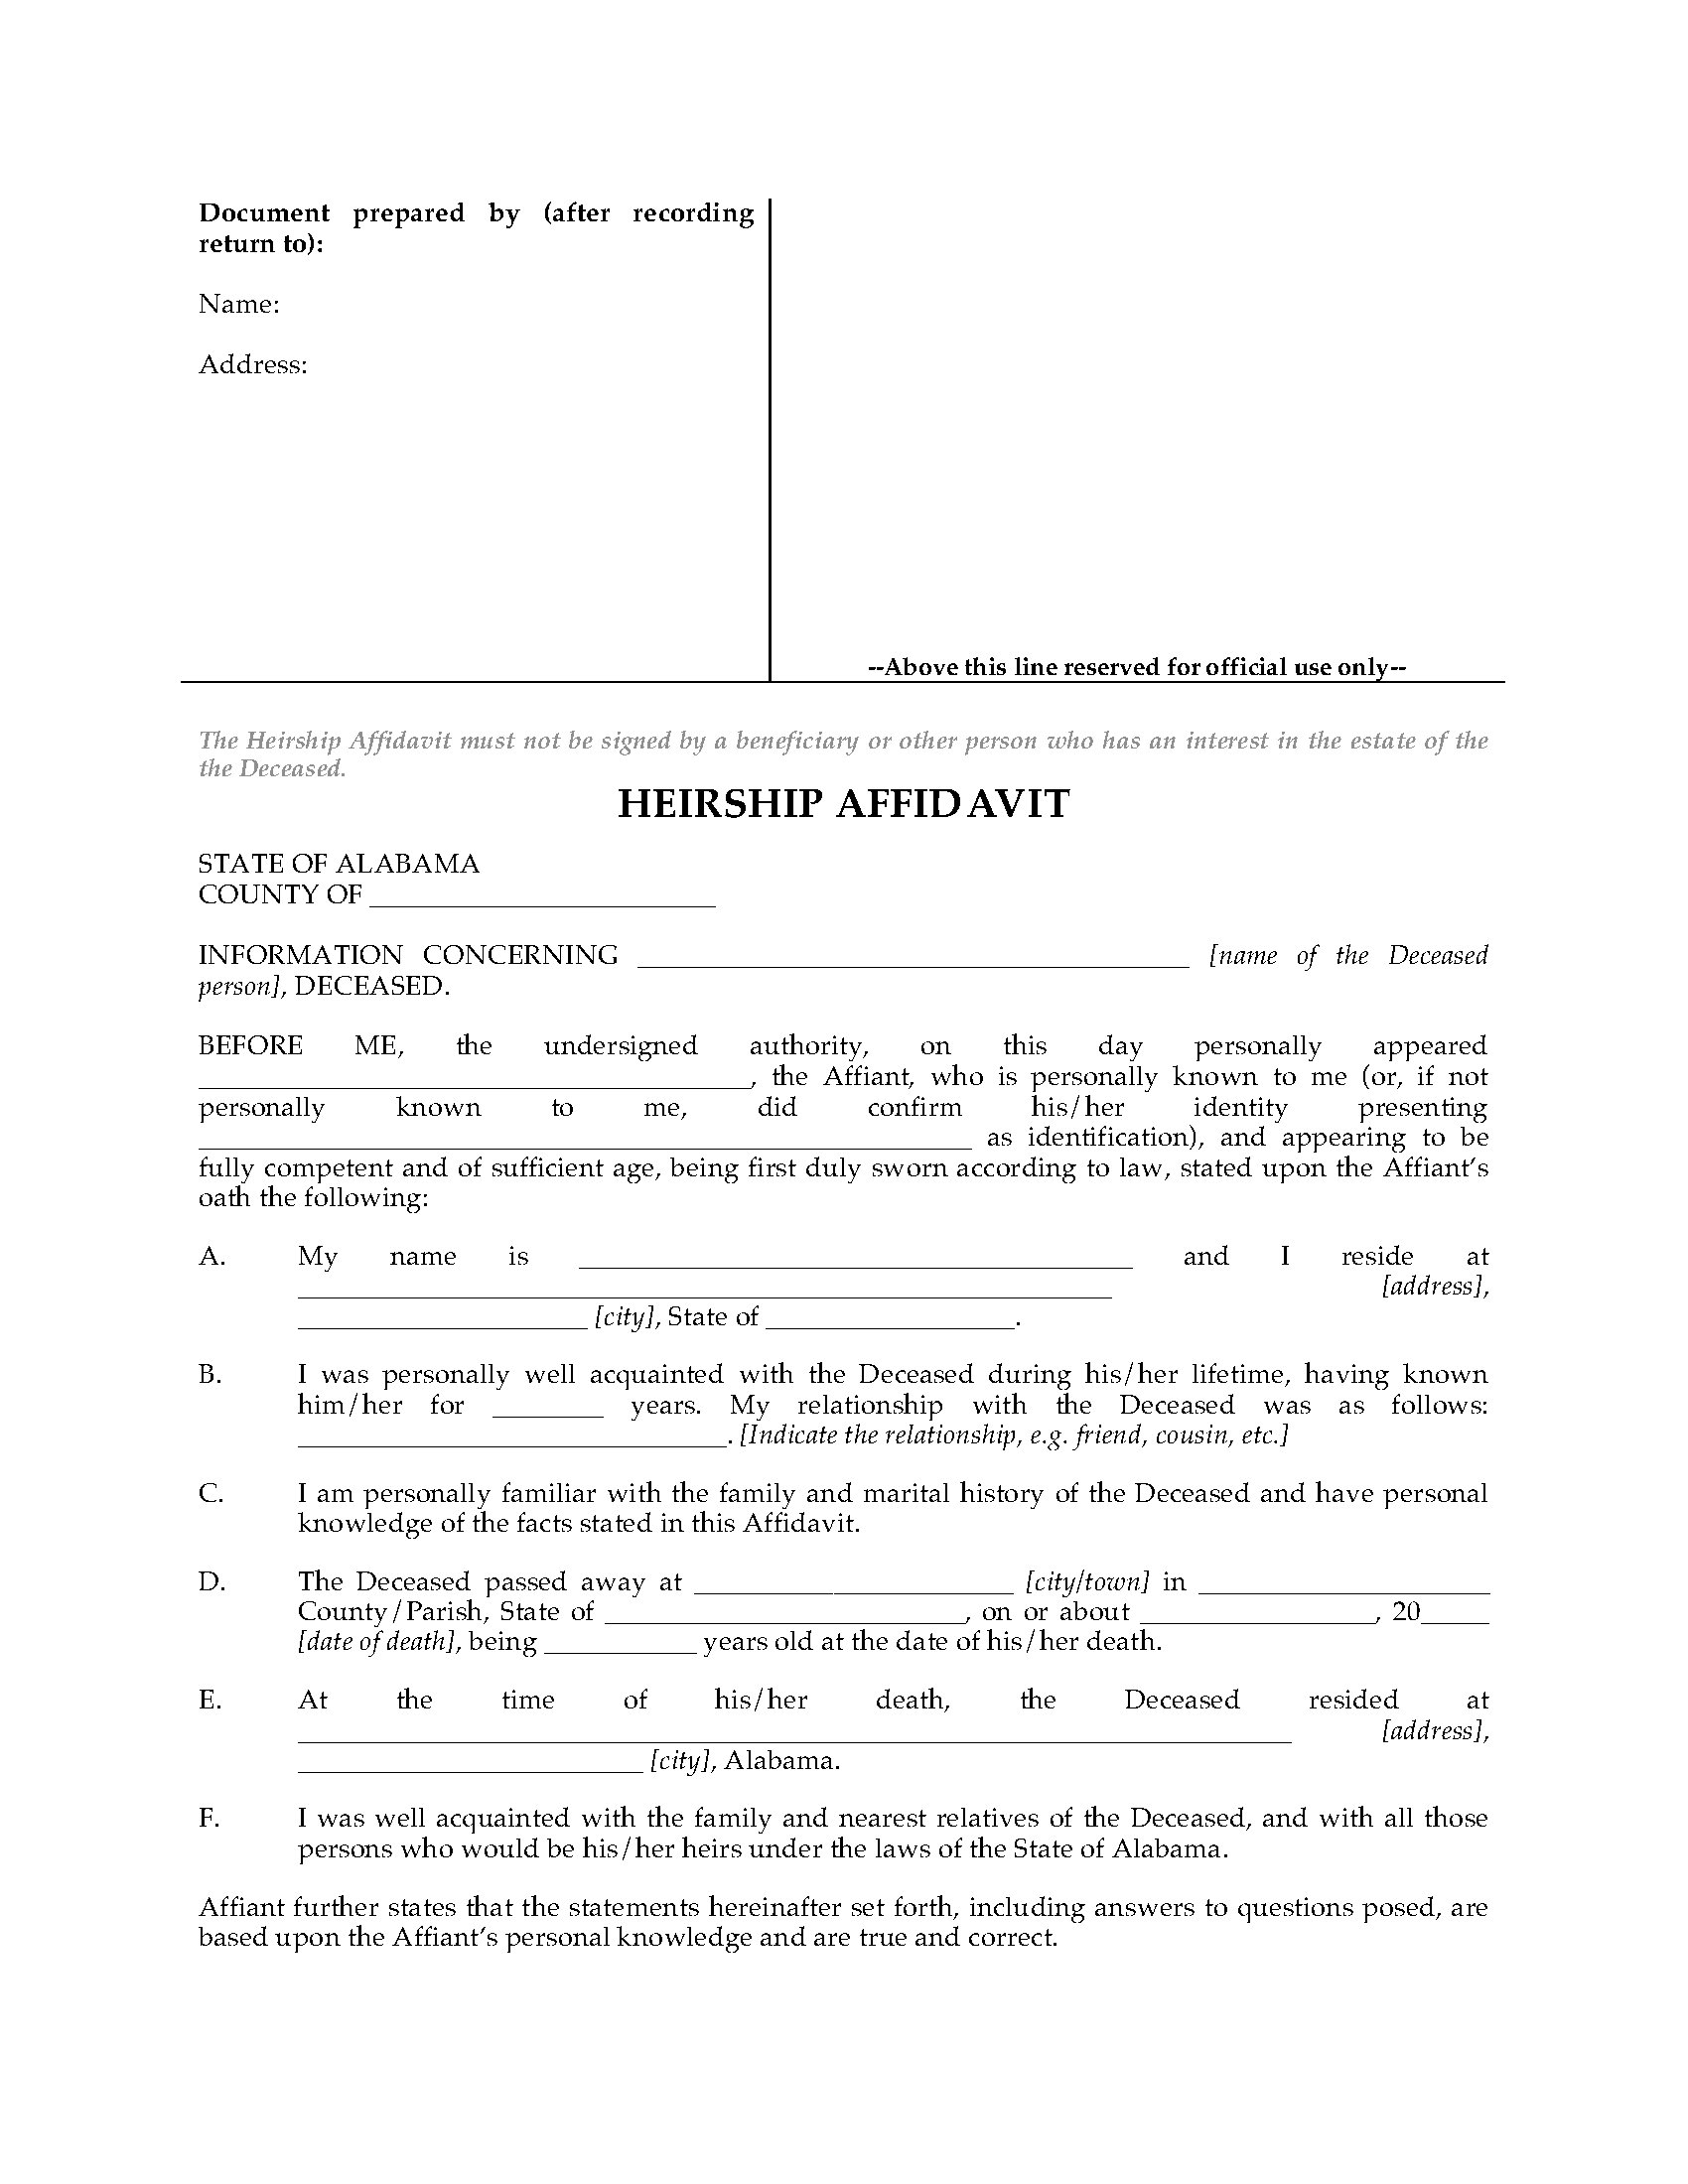 alabama-heirship-affidavit-legal-forms-and-business-templates